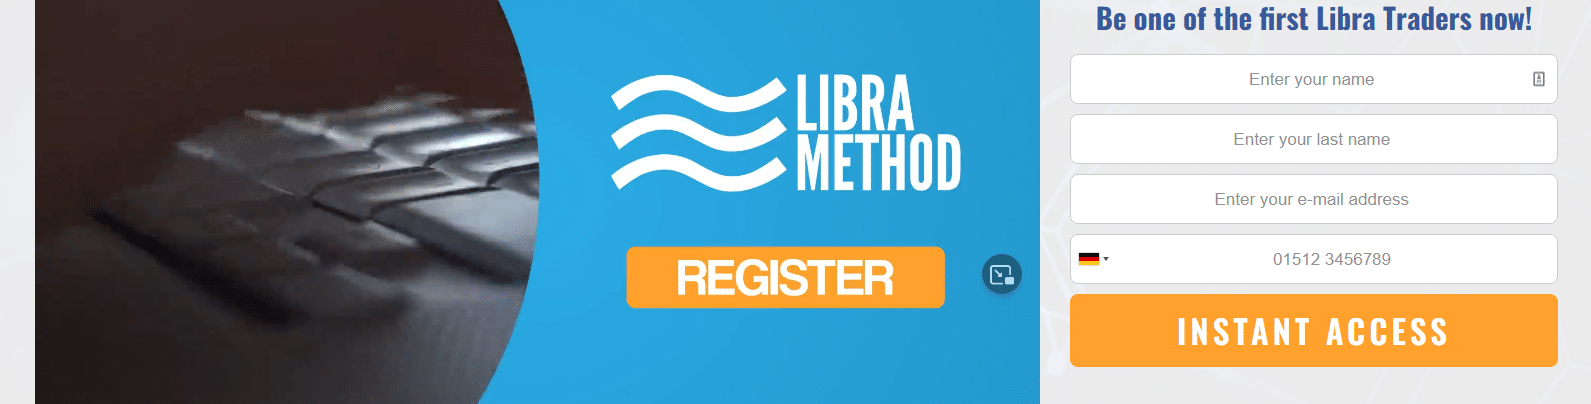 Libra Method Anmeldung